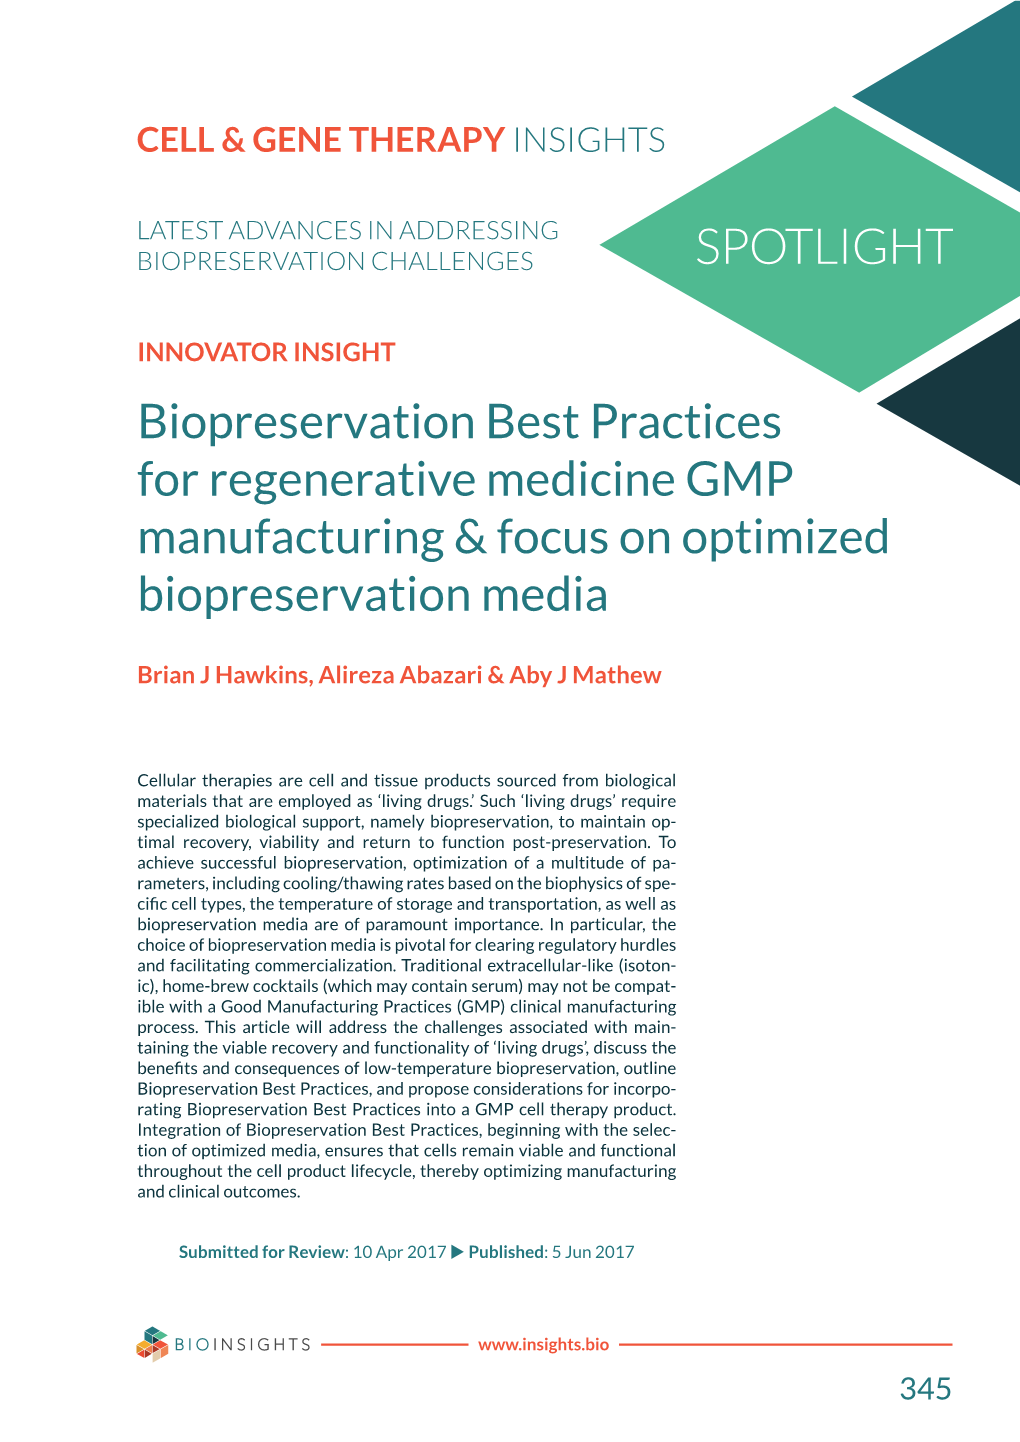 Biopreservation Best Practices for Regenerative Medicine GMP Manufacturing & Focus on Optimized Biopreservation Media